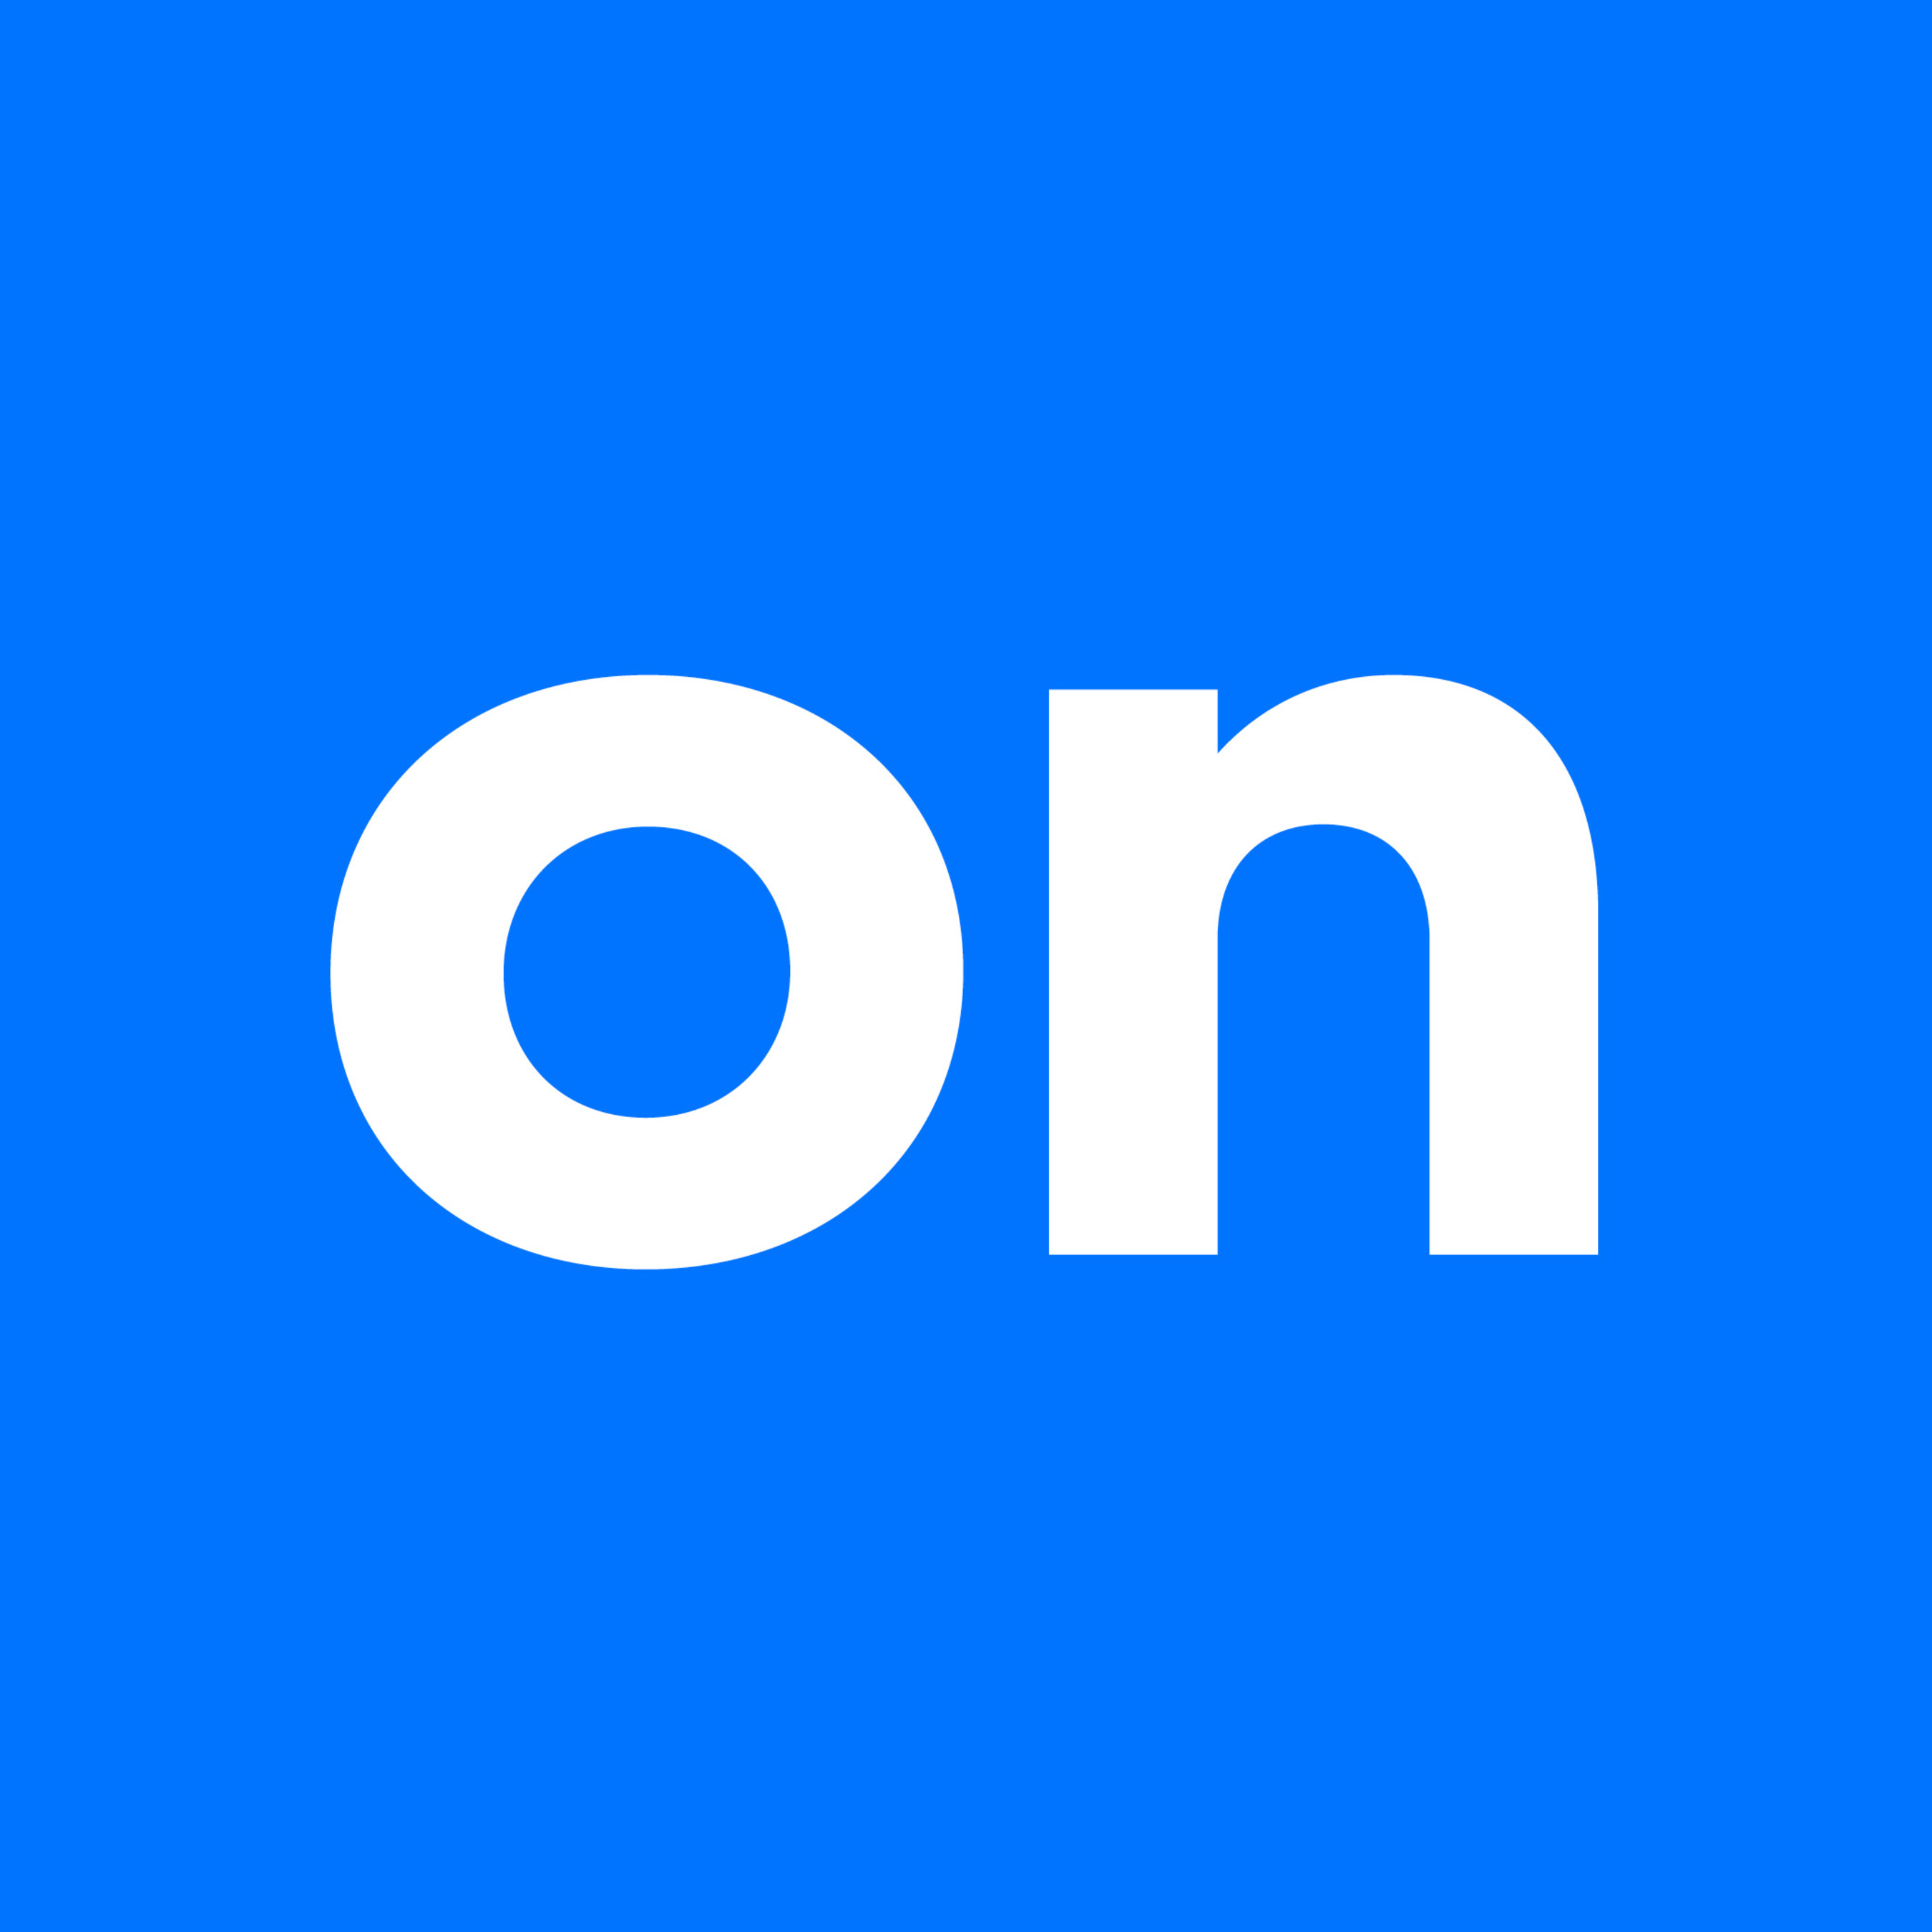 OnDeck Logo